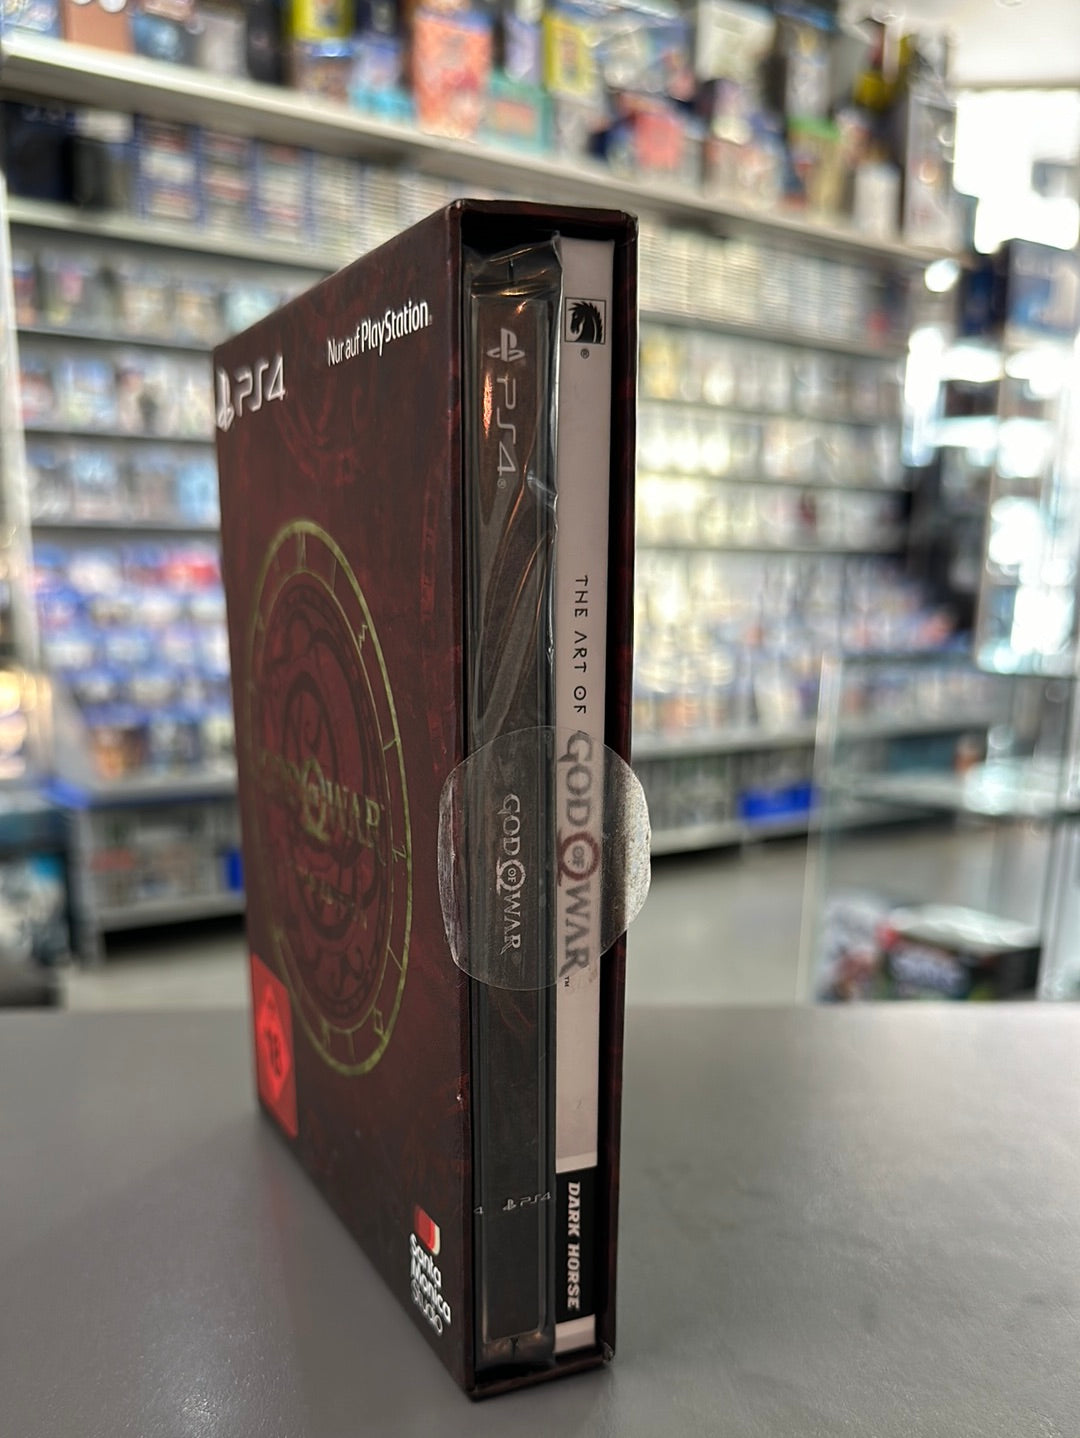 God of War - Limited Edition Neu